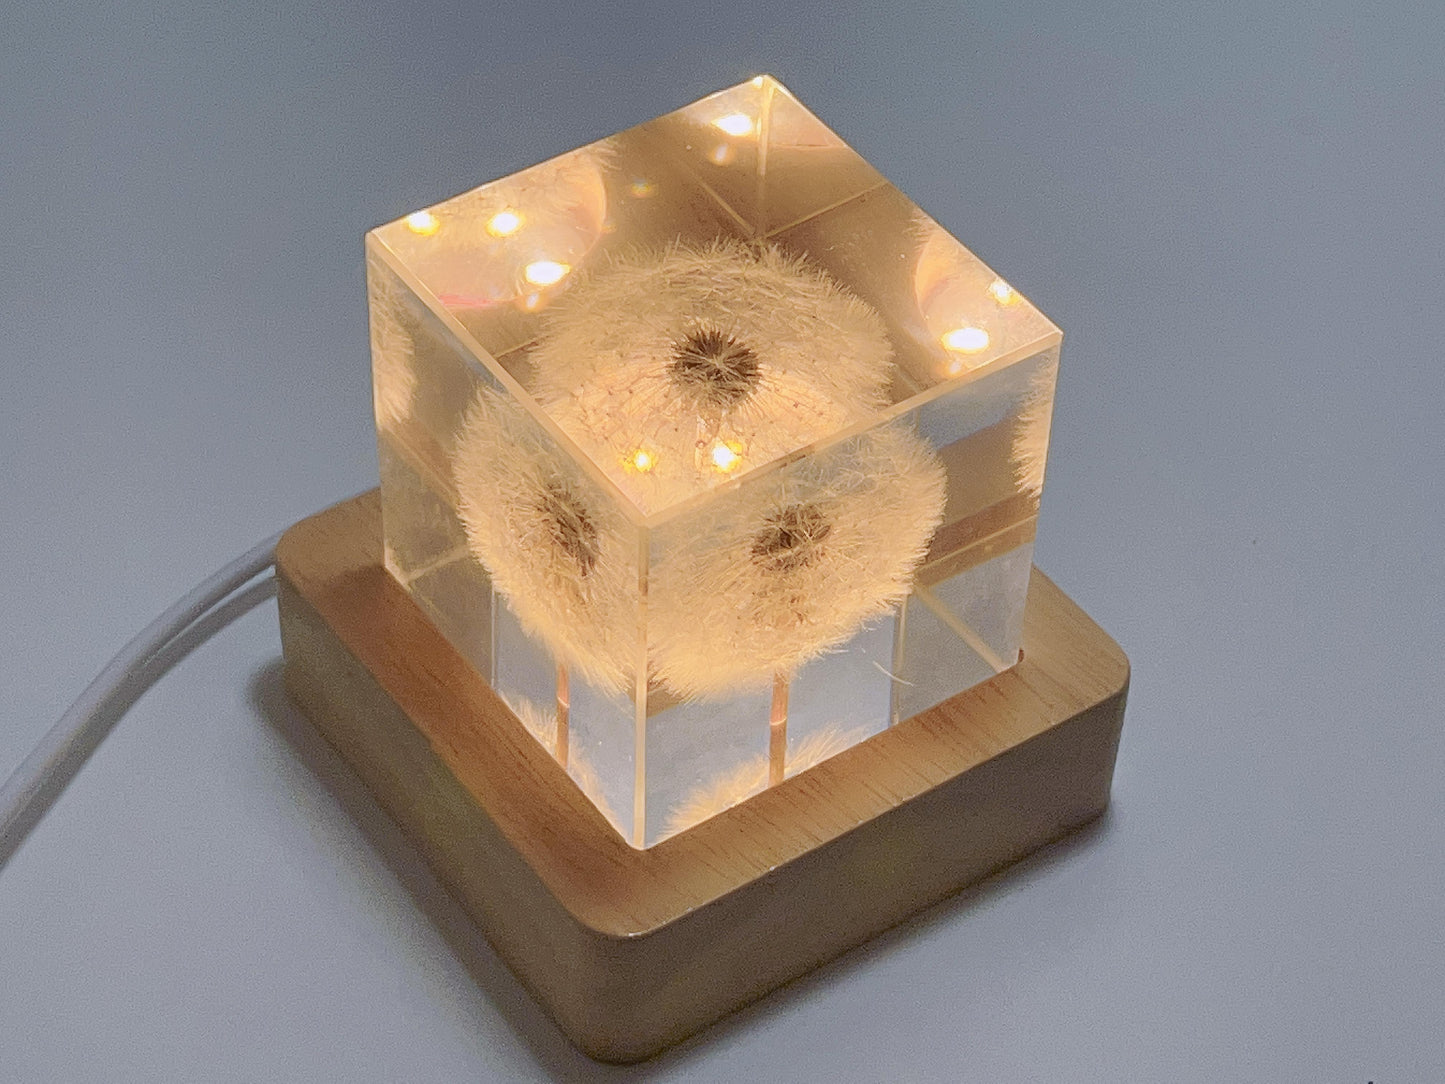 Imortal Flower Lamp - Dandelion Cube